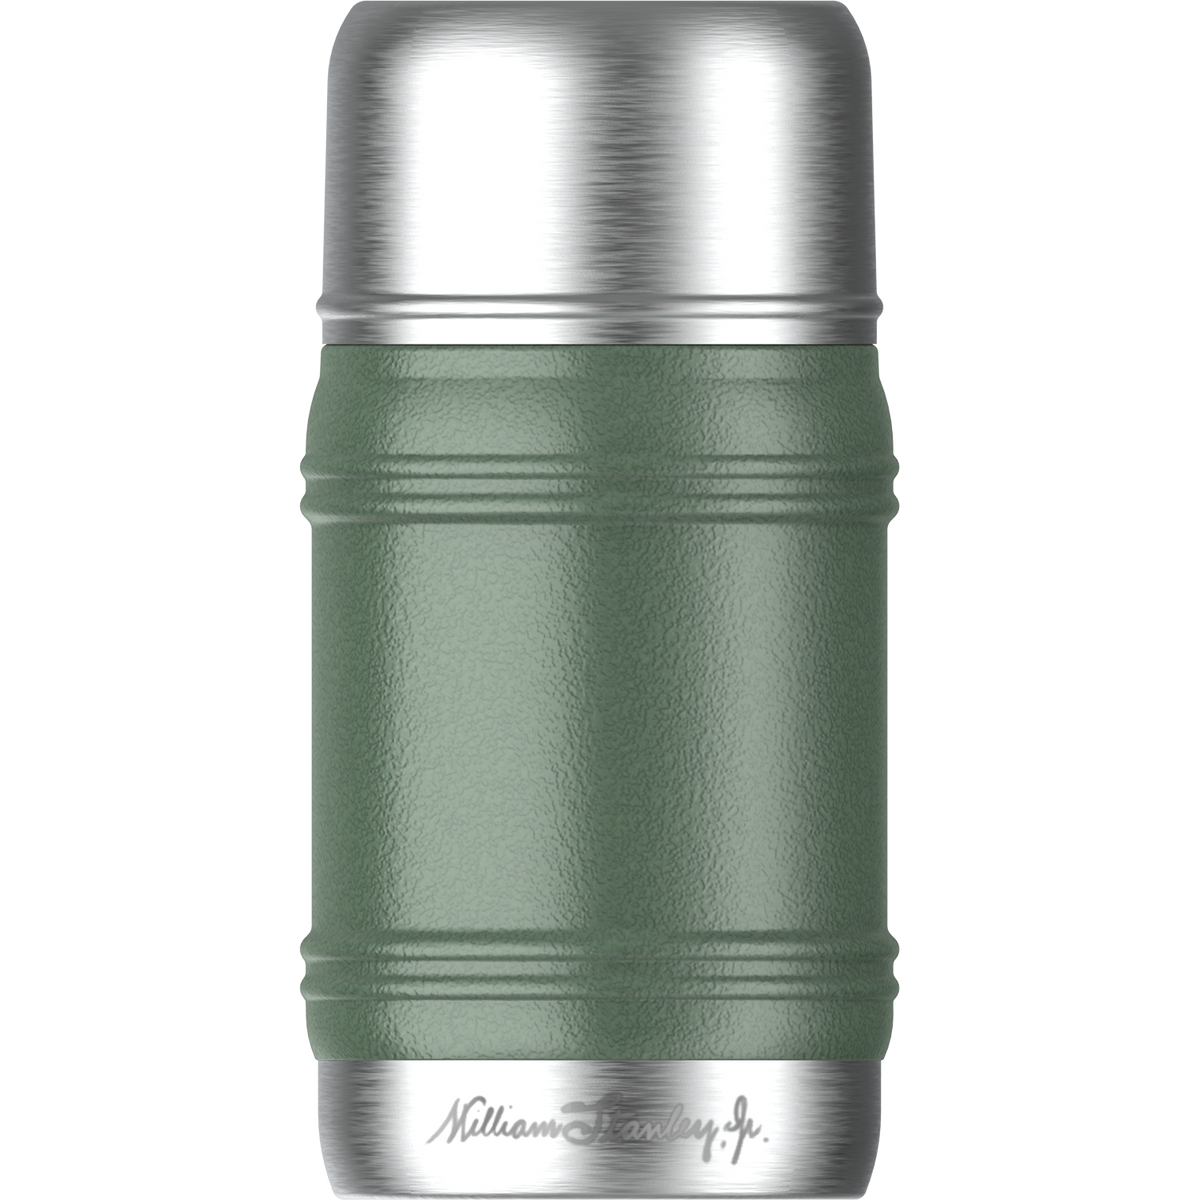 Stanley The Artisan Thermal Food Jar | 0.5L